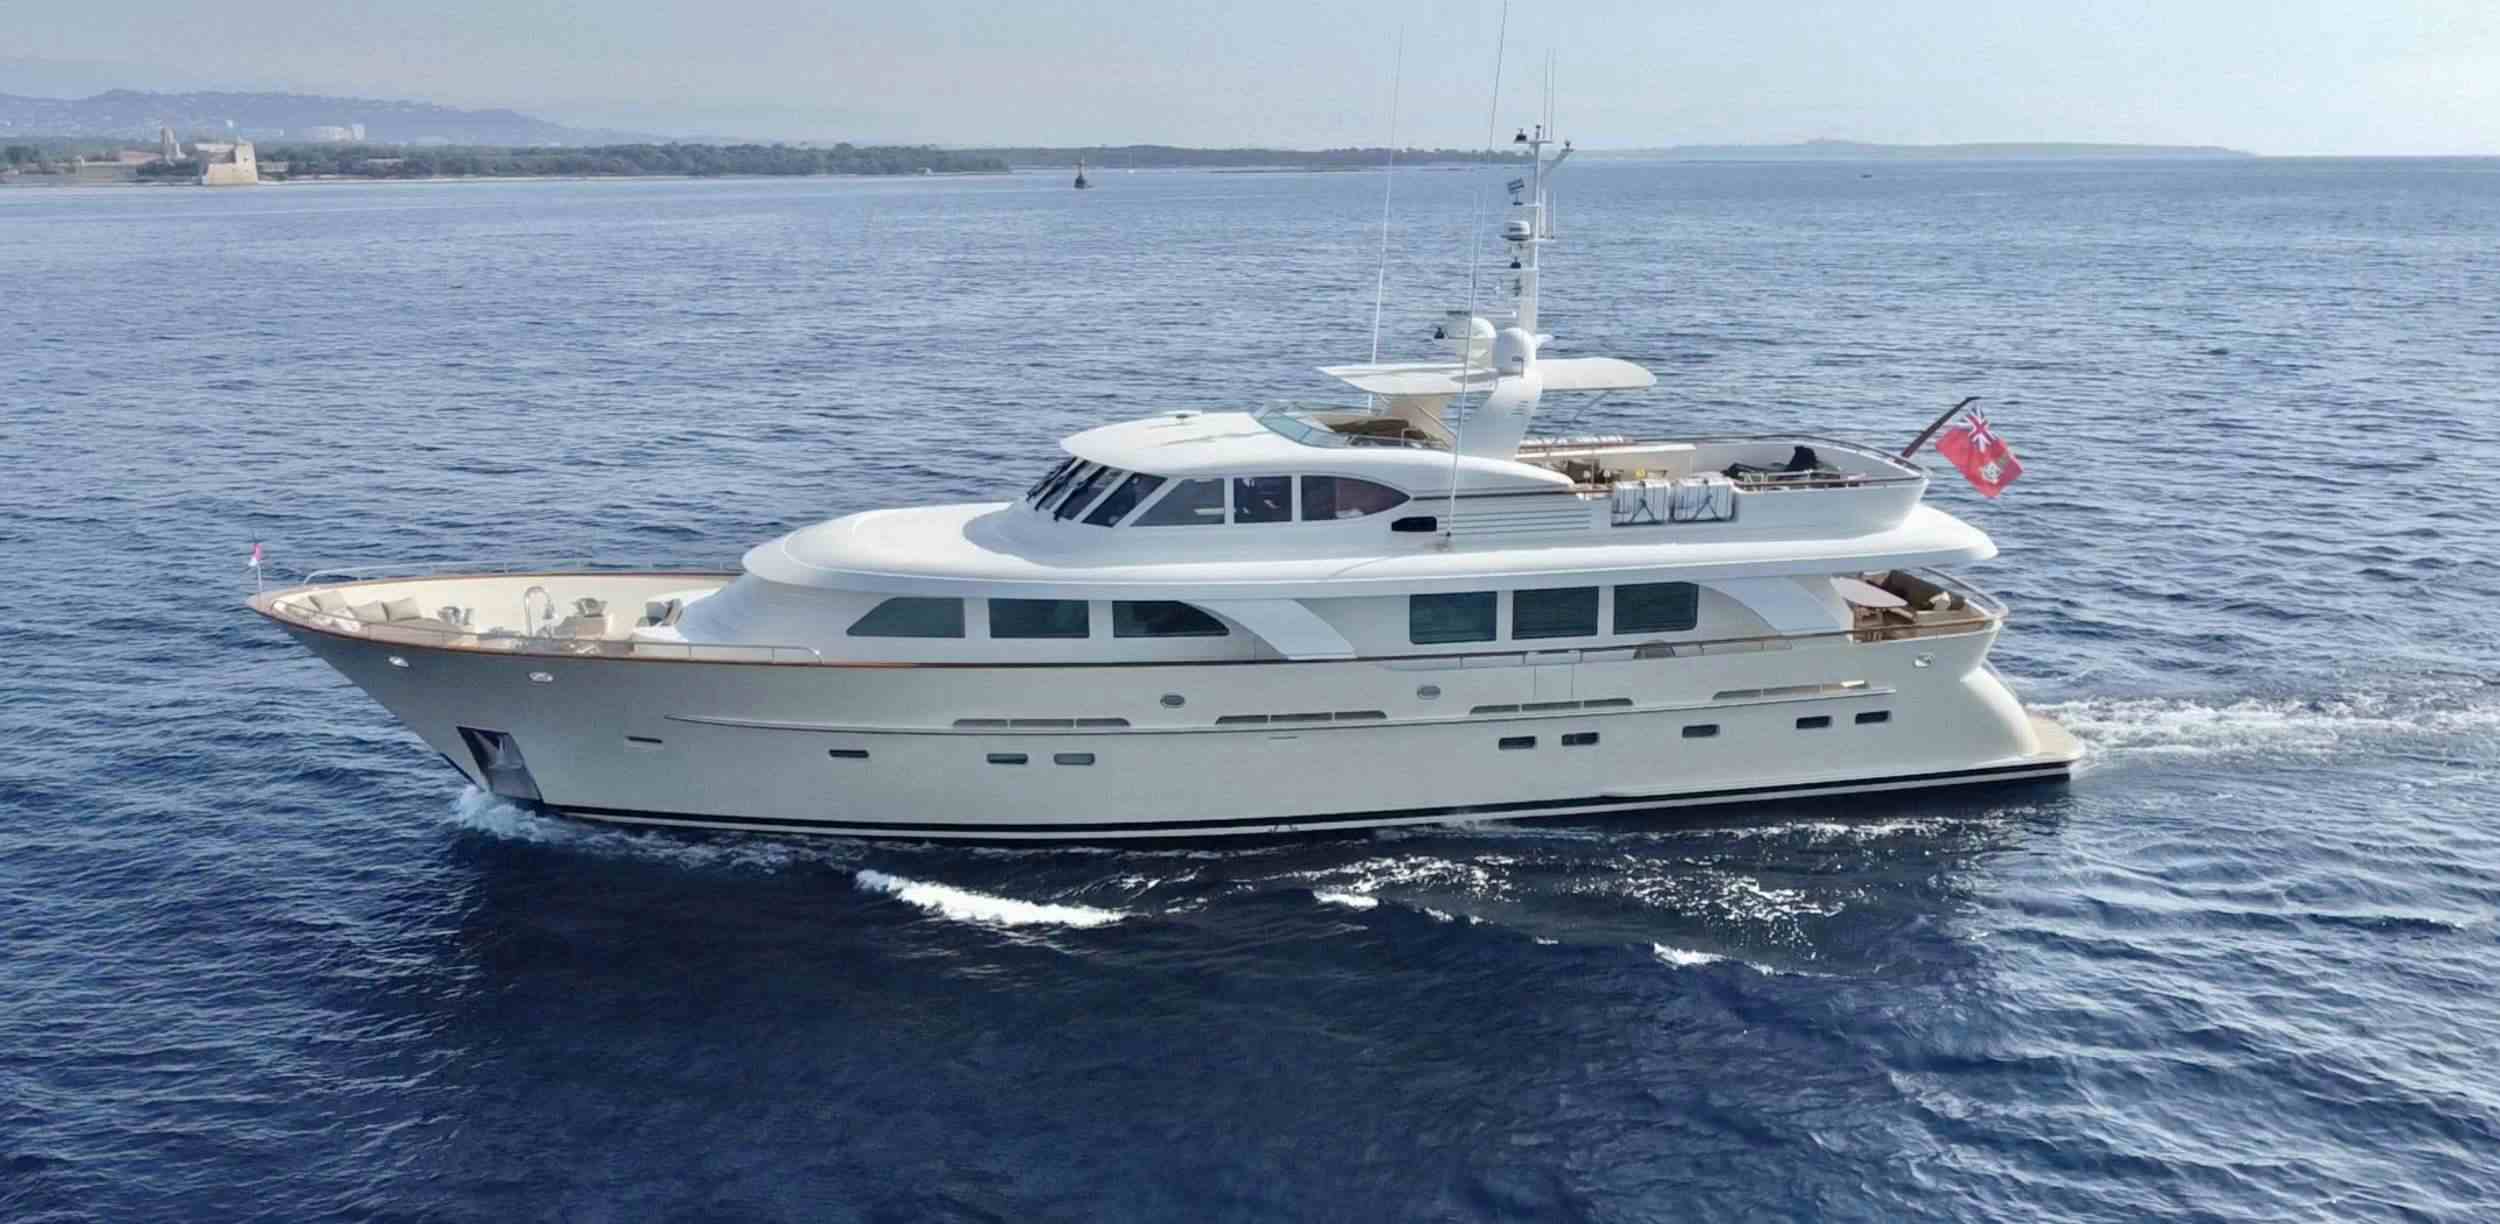 ORIZZONTE - Yacht Charter Herceg Novi & Boat hire in W. Med -Naples/Sicily, W. Med -Riviera/Cors/Sard., W. Med - Spain/Balearics 1